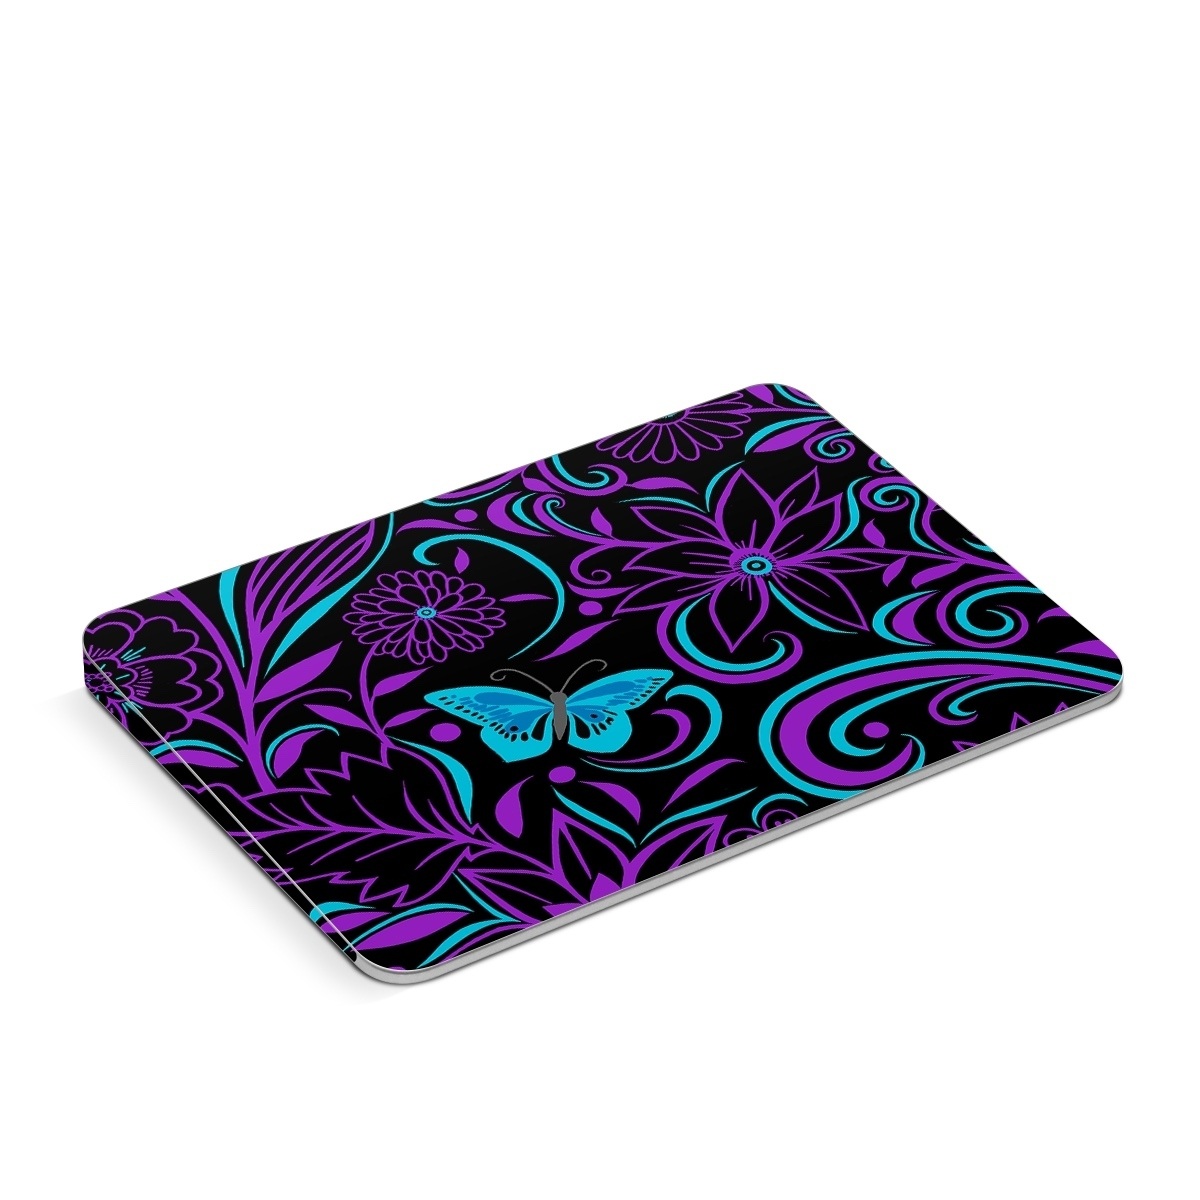 Apple Magic Trackpad Skin design of Pattern, Purple, Violet, Turquoise, Teal, Design, Floral design, Visual arts, Magenta, Motif, with black, purple, blue colors